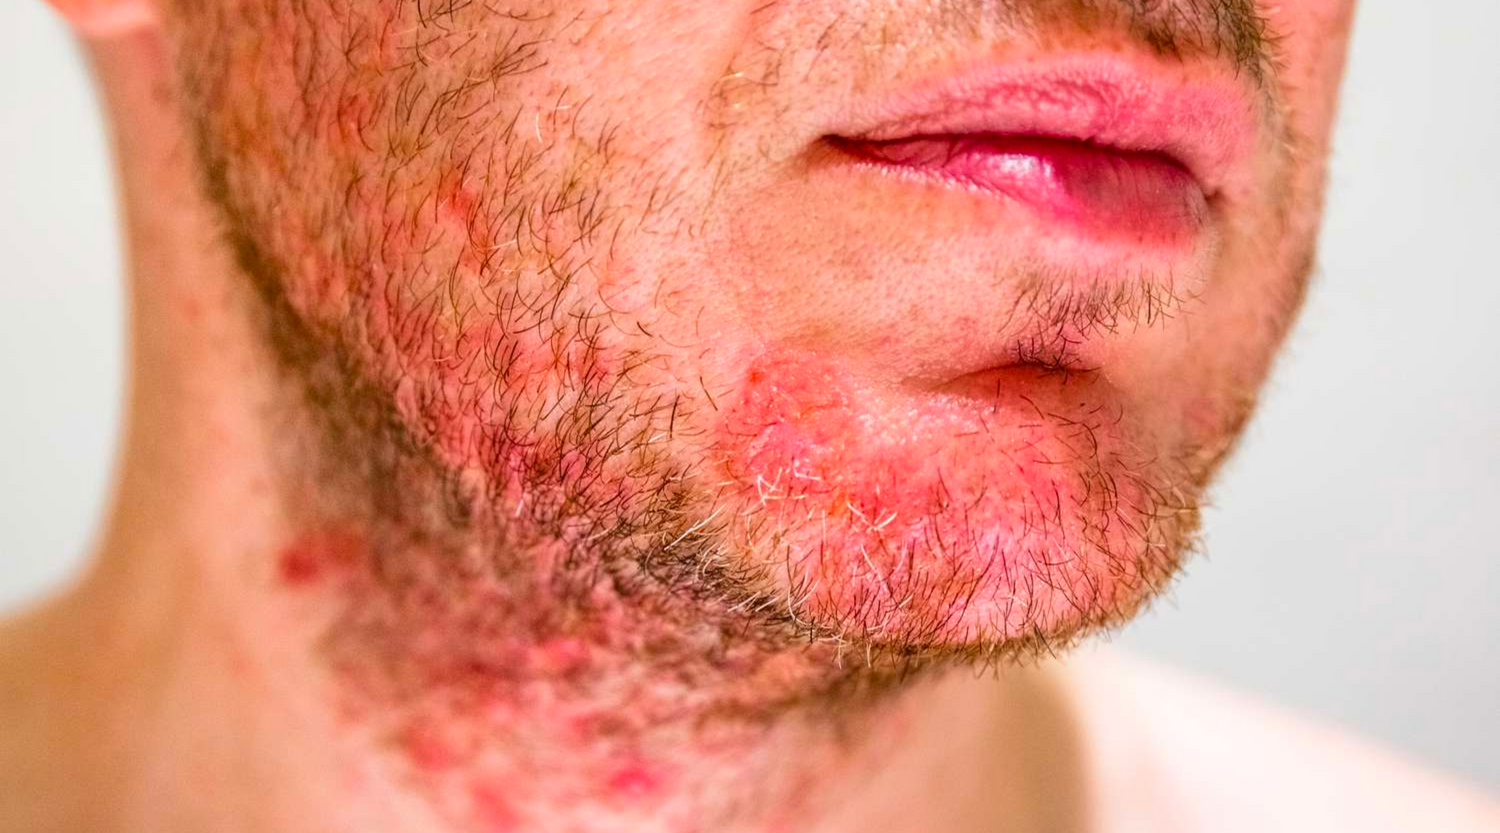 How to Treat Seborrheic Dermatitis on the Face?